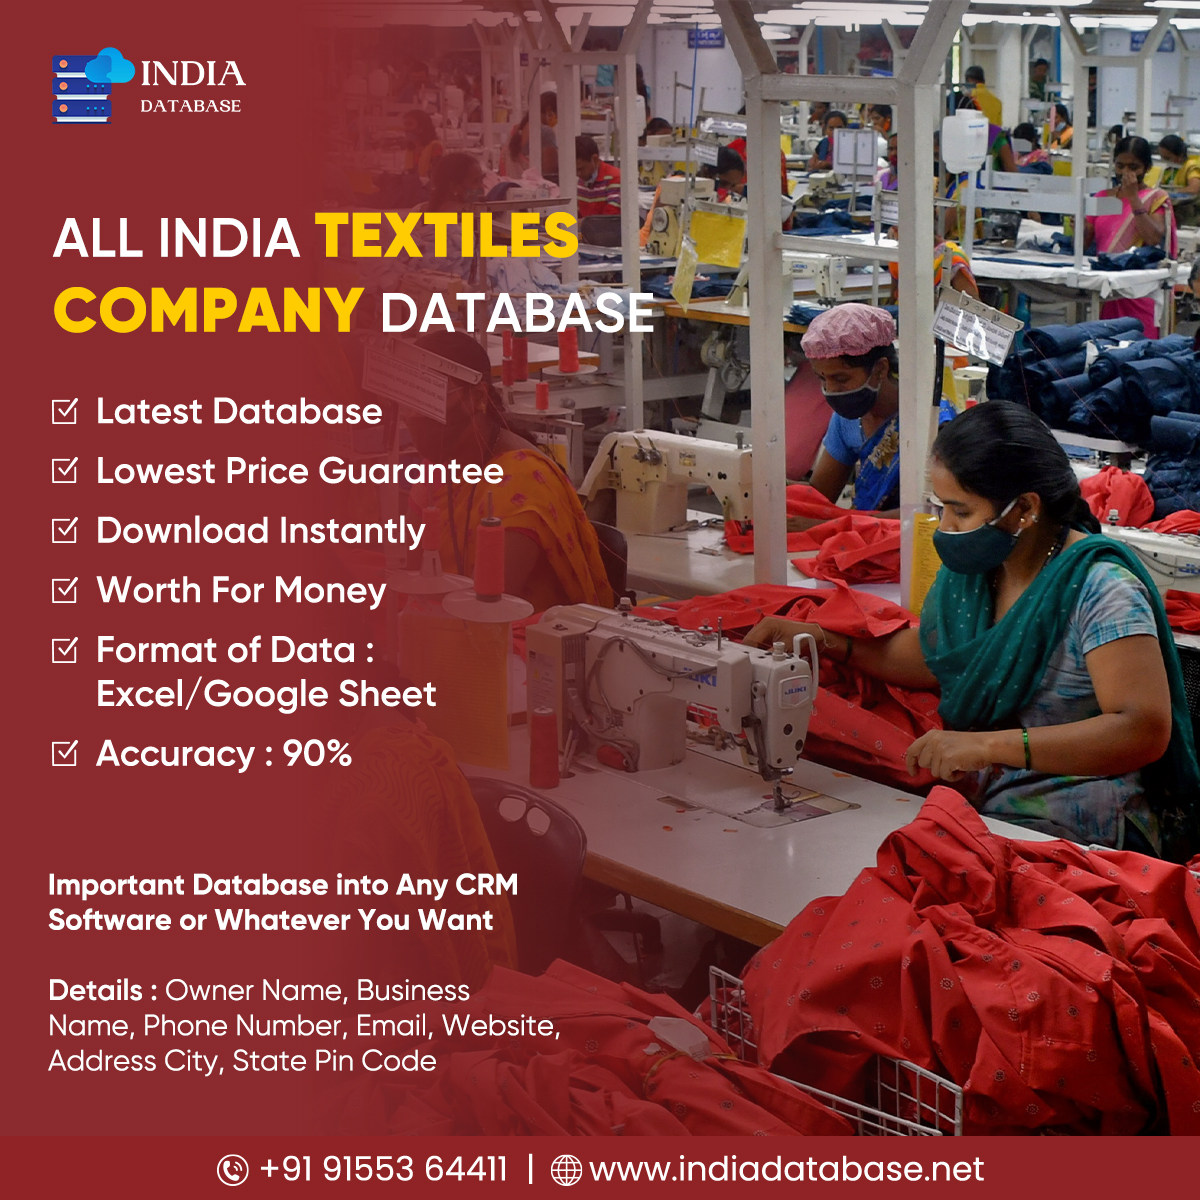 All India Textiles Company Database